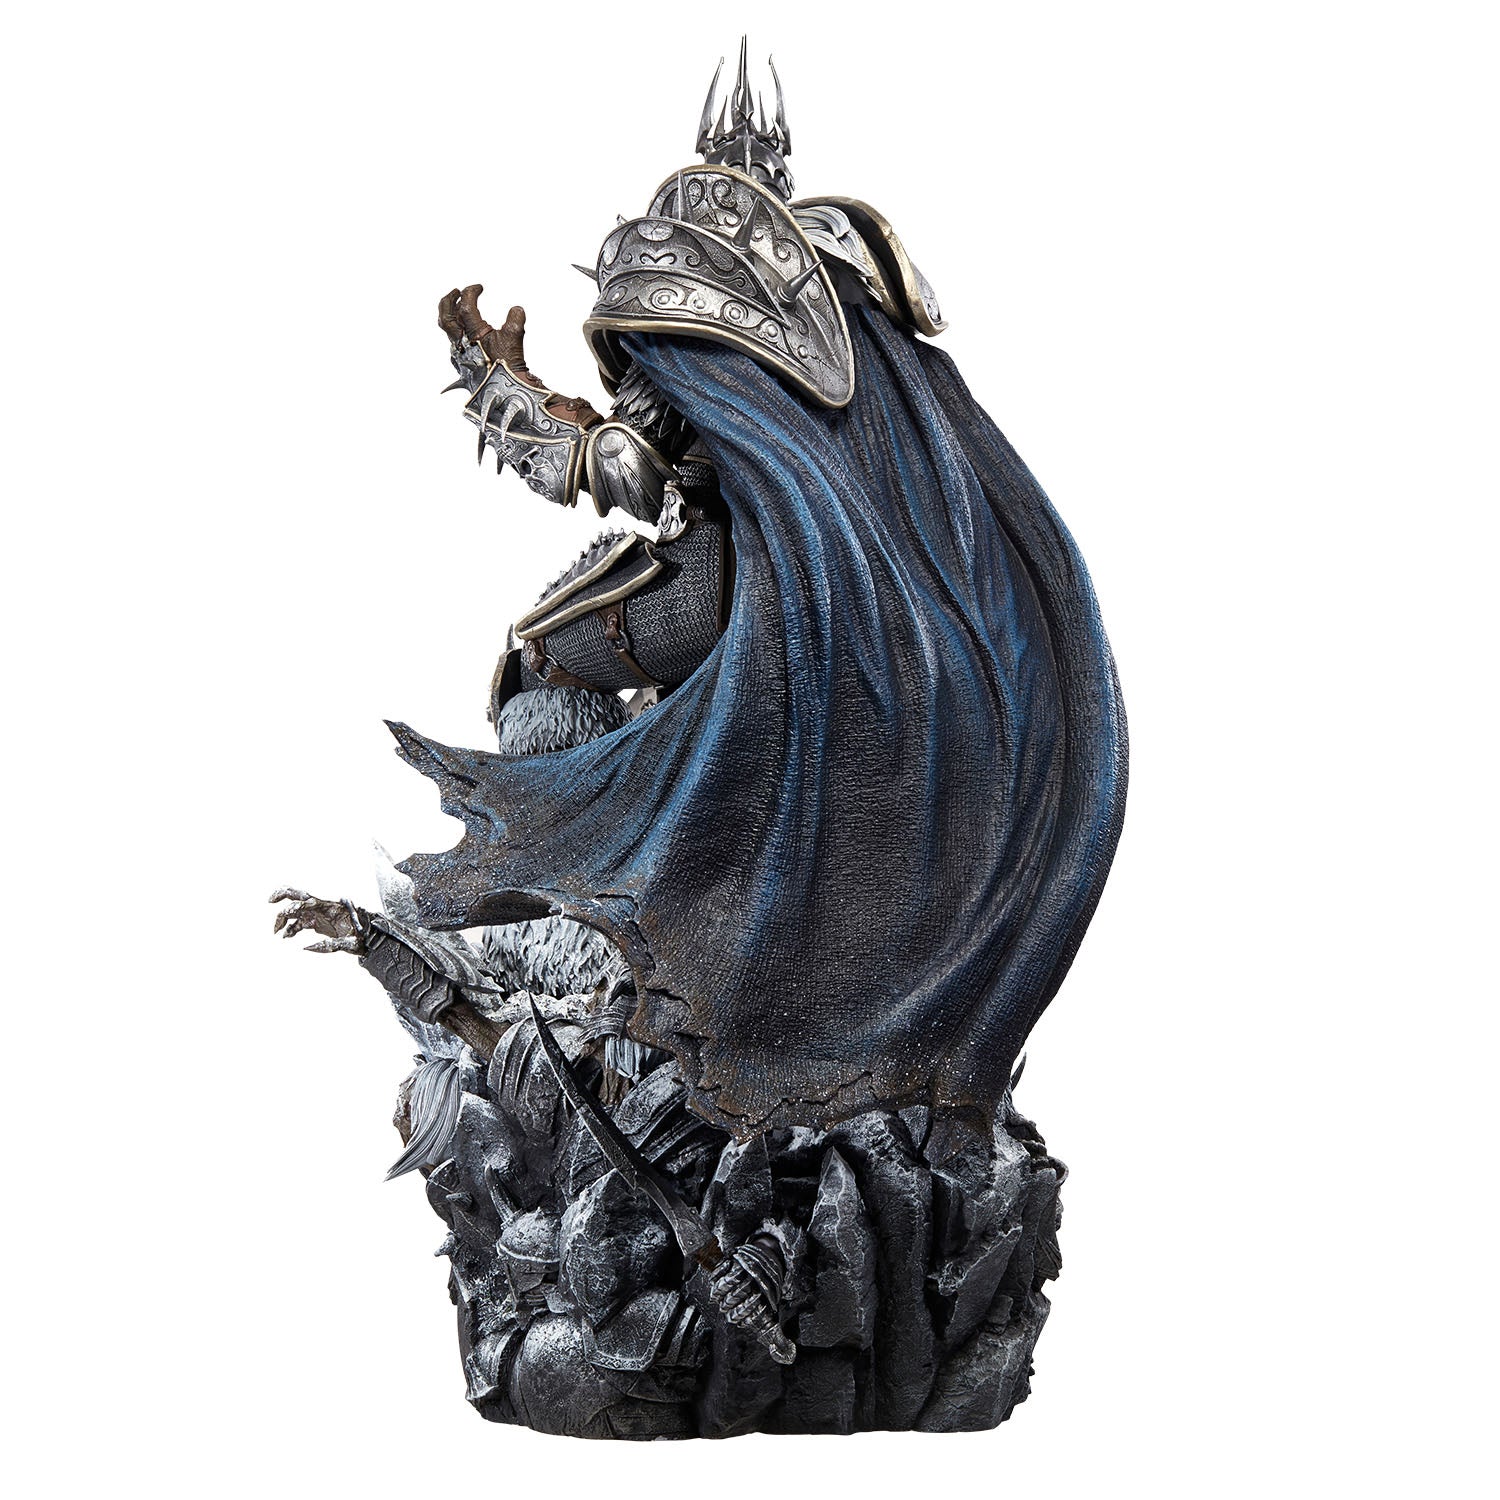 World of Warcraft Lich King Arthas 26" Premium Statue in Grey - Back View